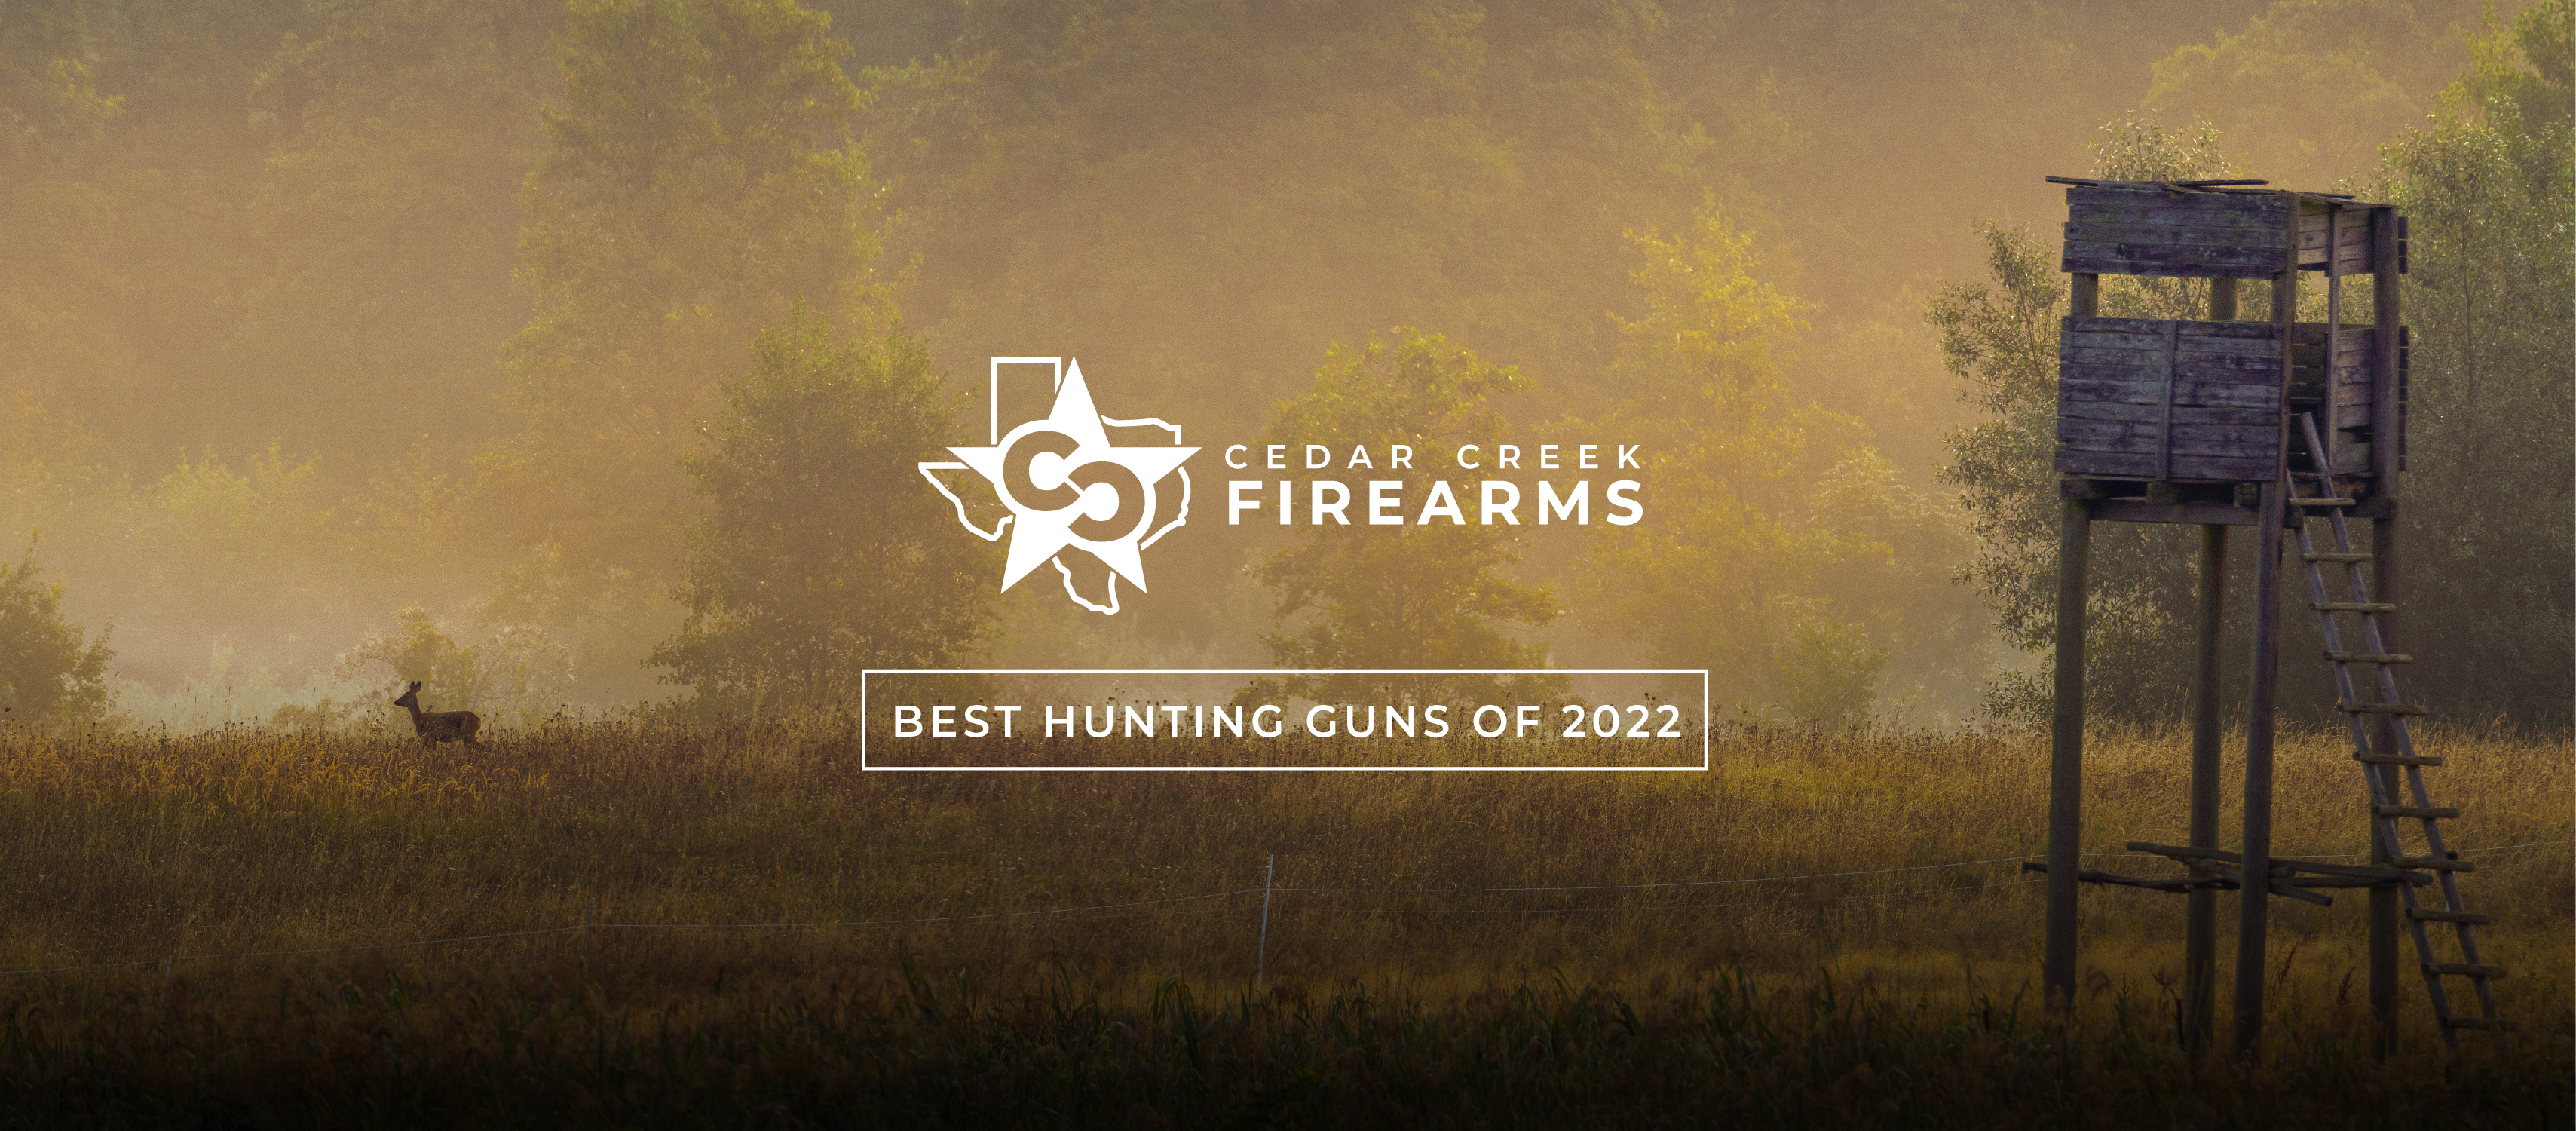 https://www.cedarcreekfirearms.com/blog/best-hunting-guns-2022